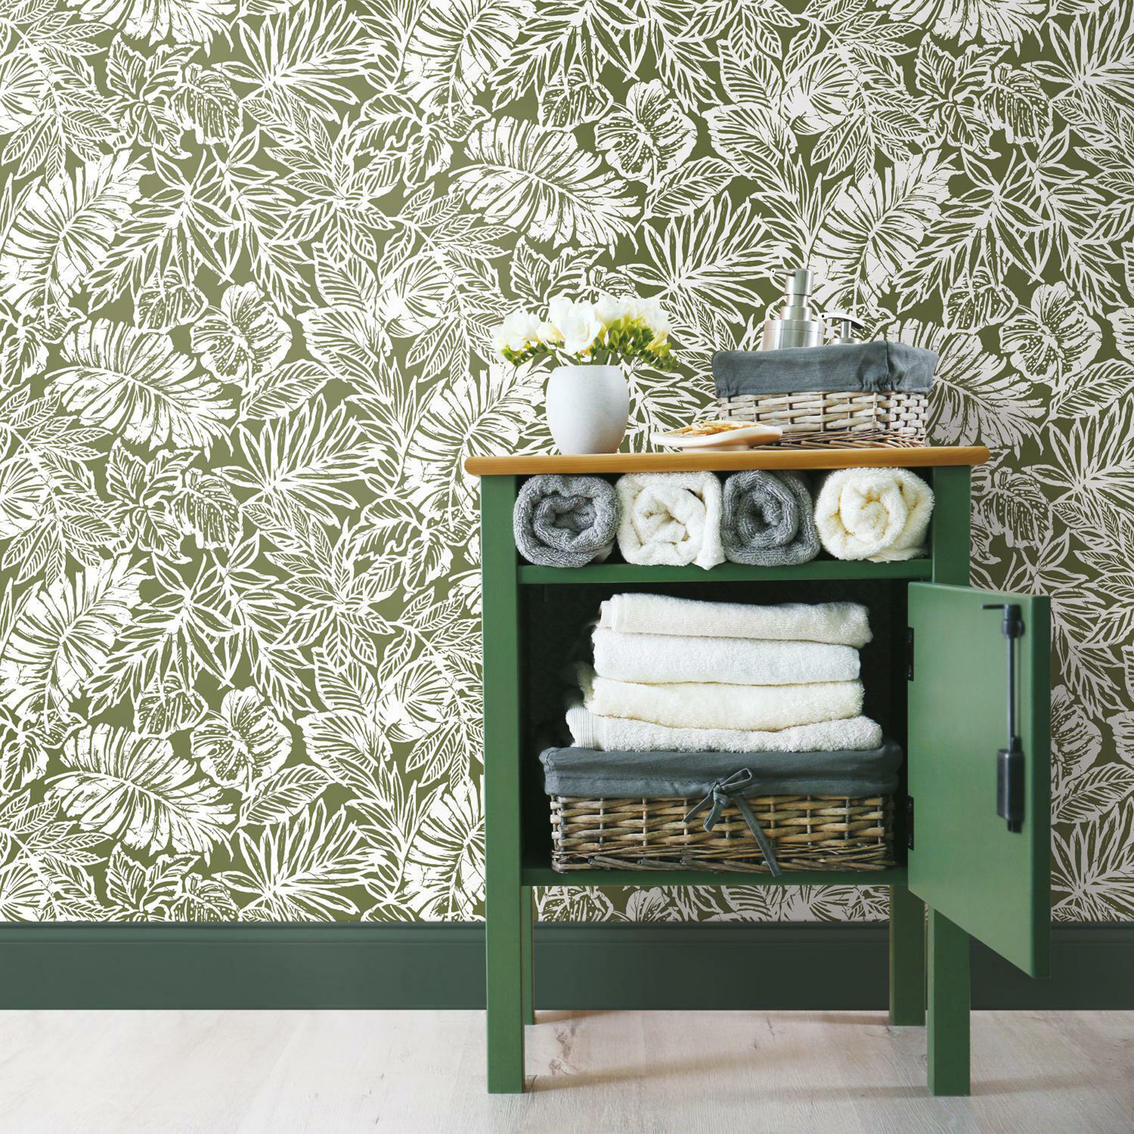 RoomMates Batik Tropical Leaf Peel and Stick Wallpaper - Image 5 of 7